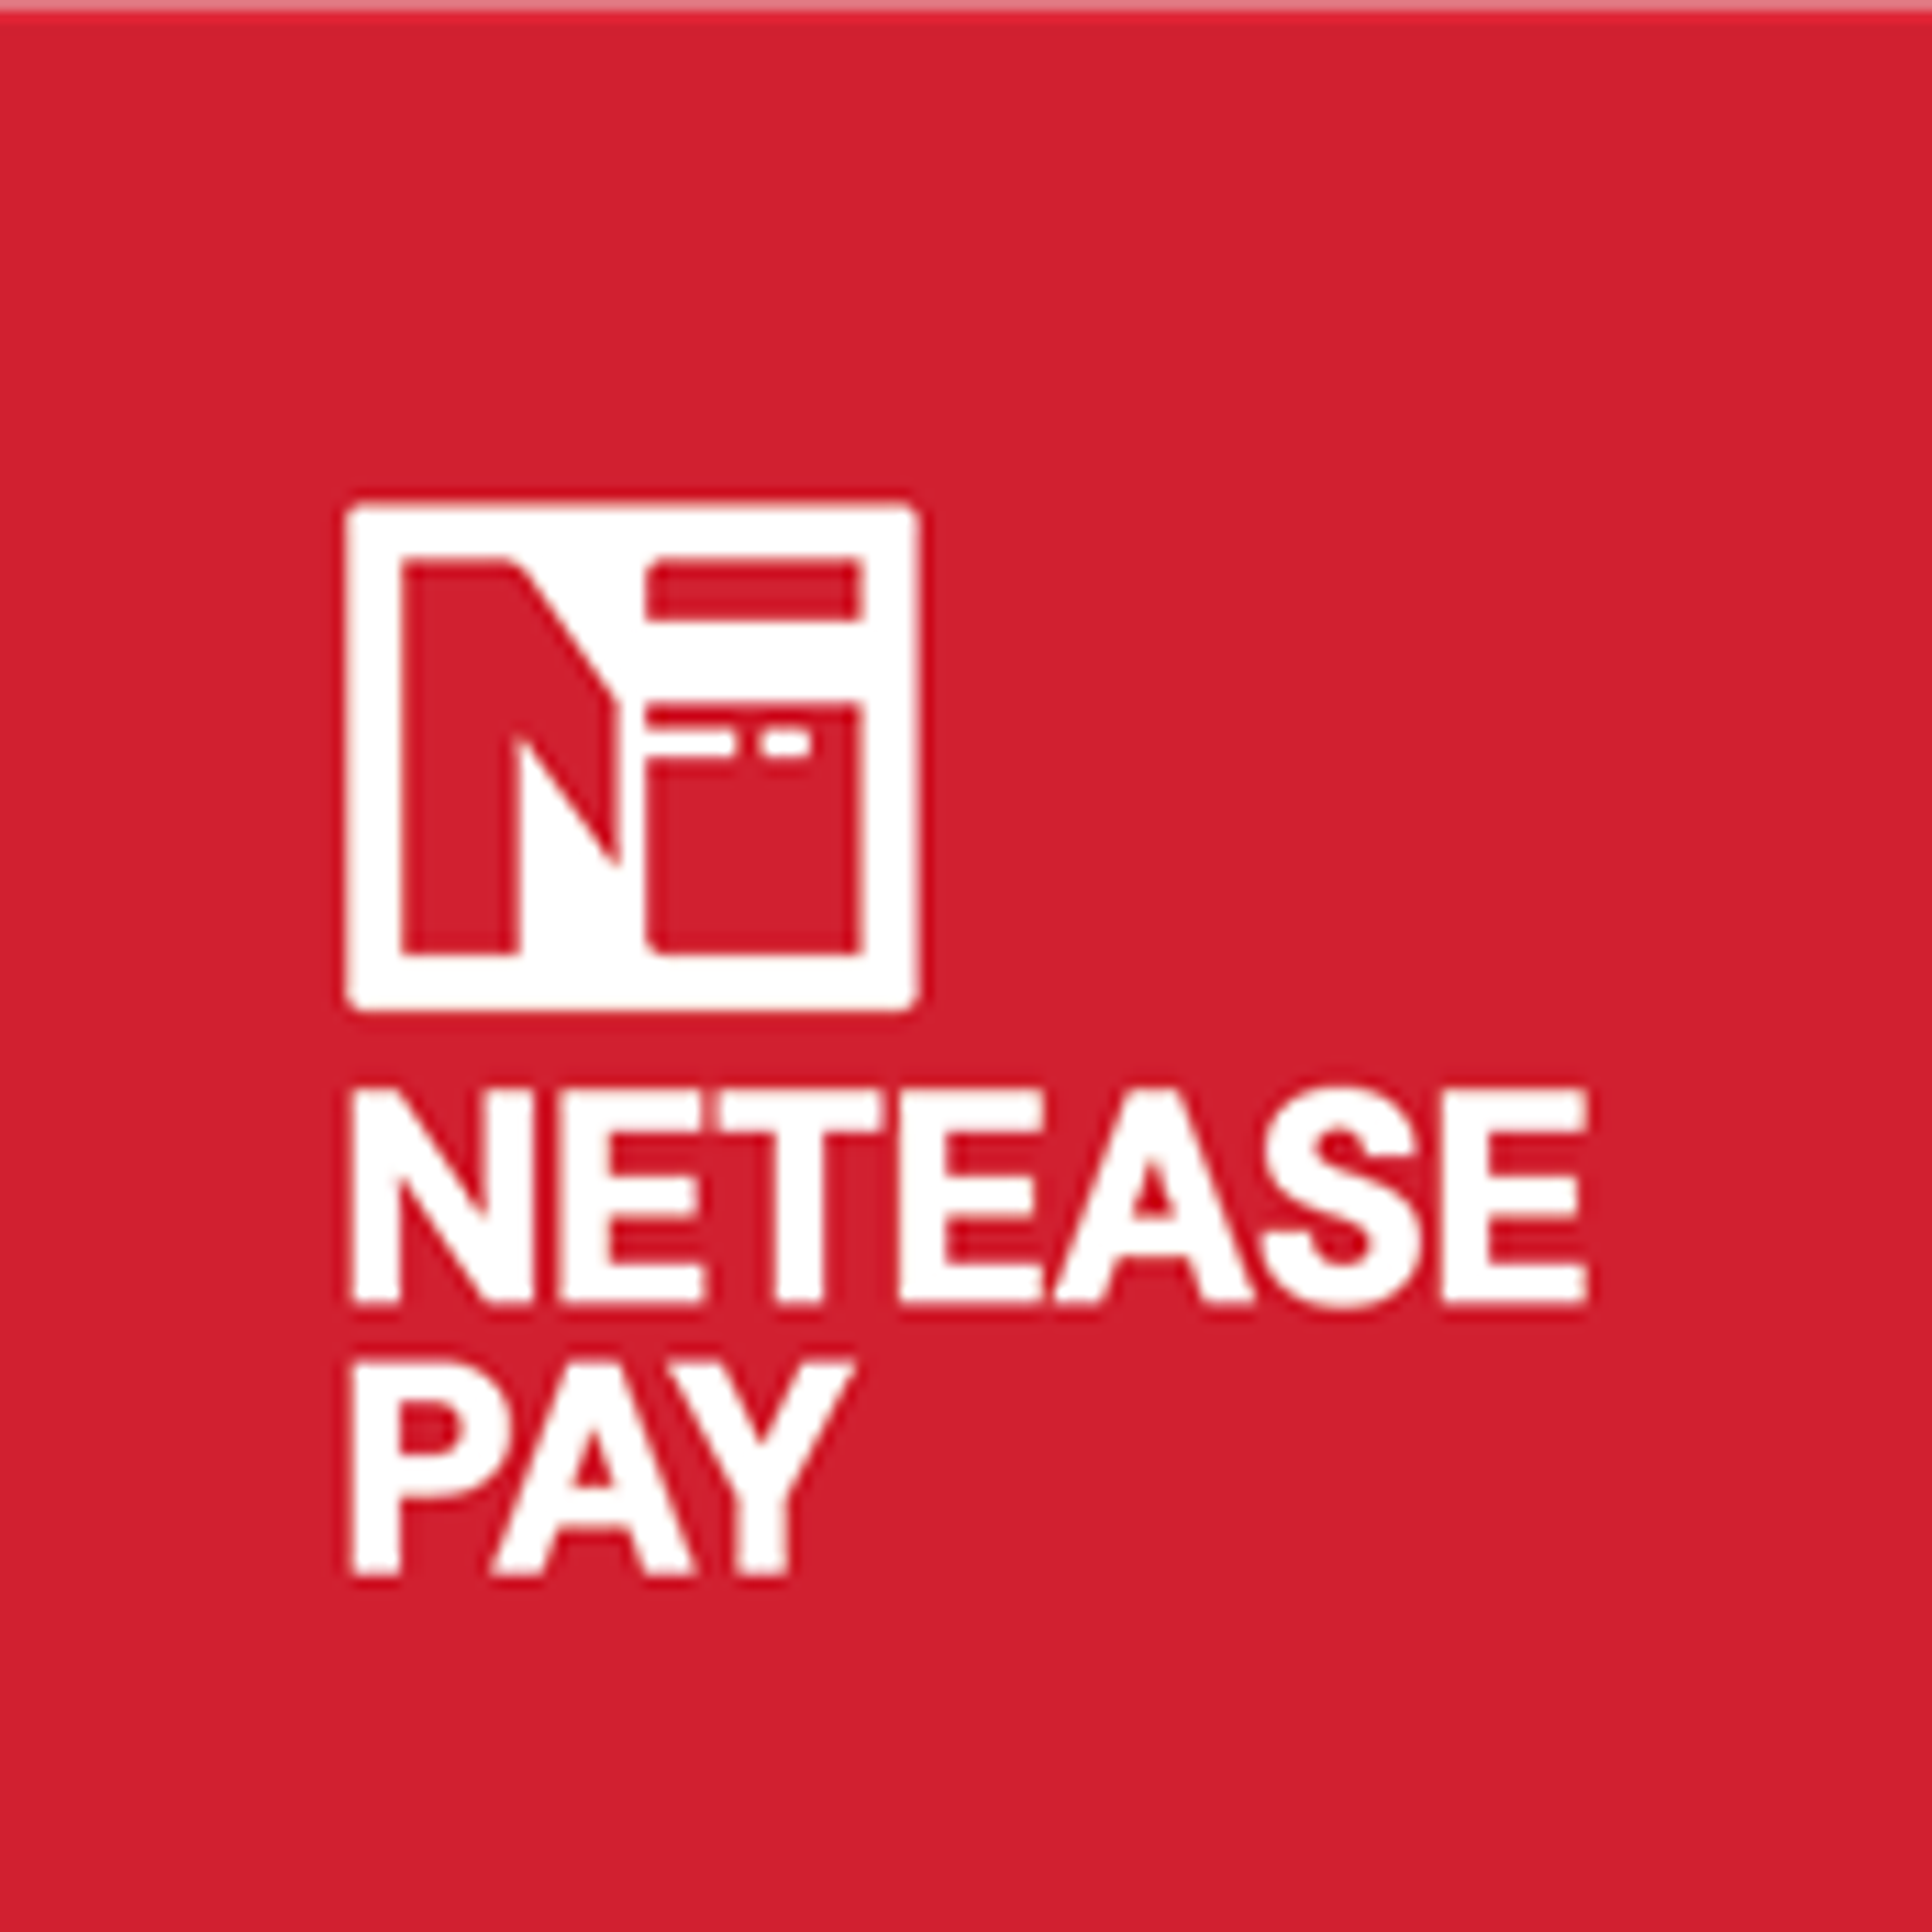 Netease Pay